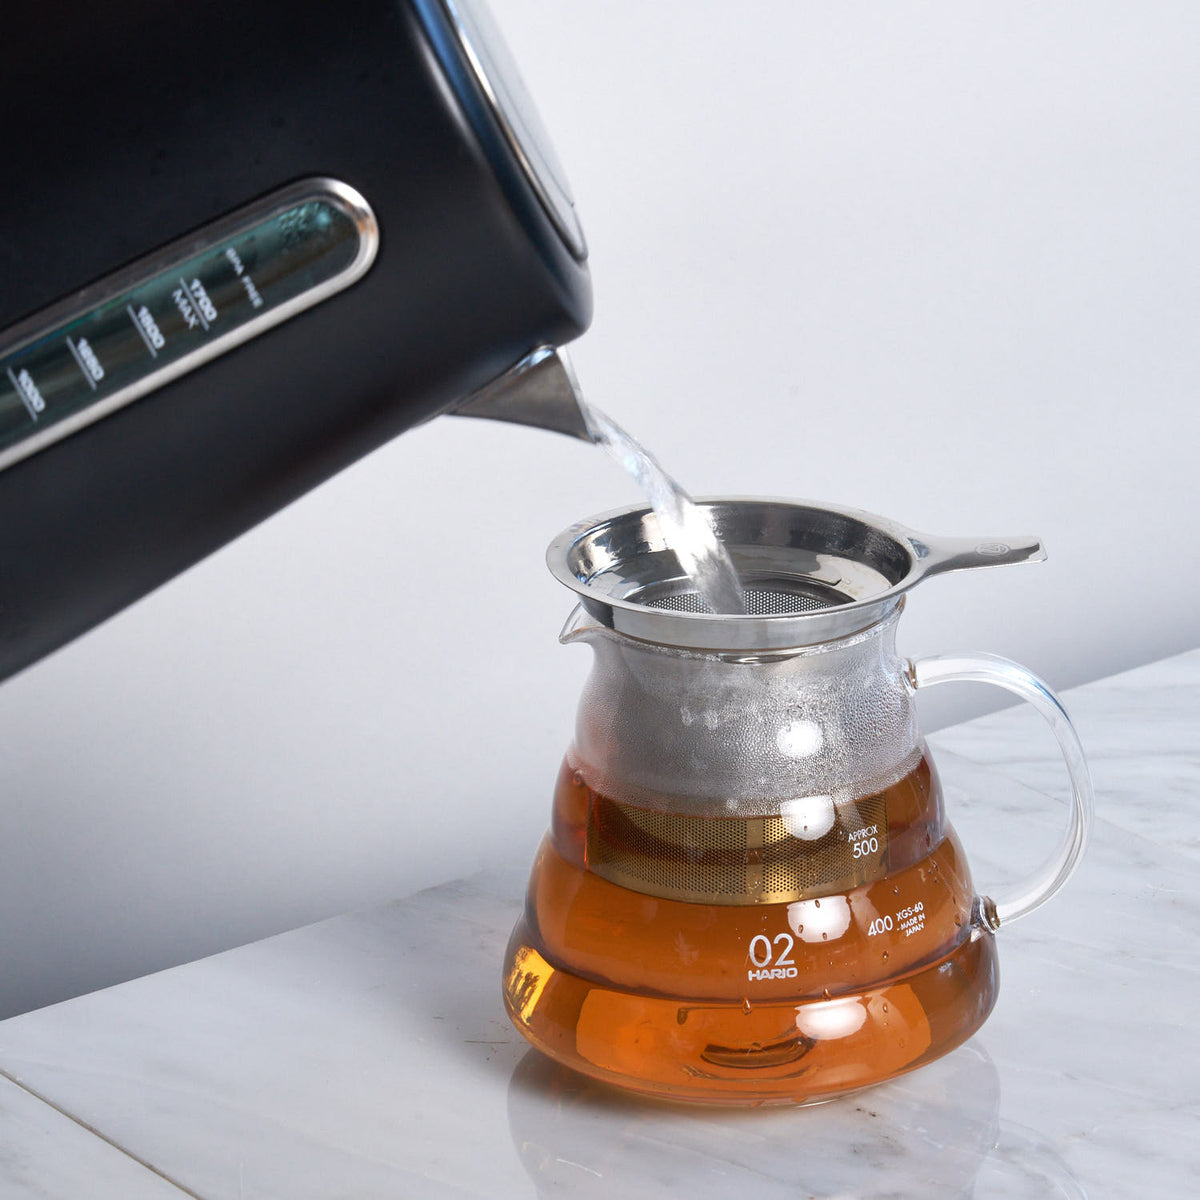 Hario V60 Glass Range Server 02: The perfect basic teapot